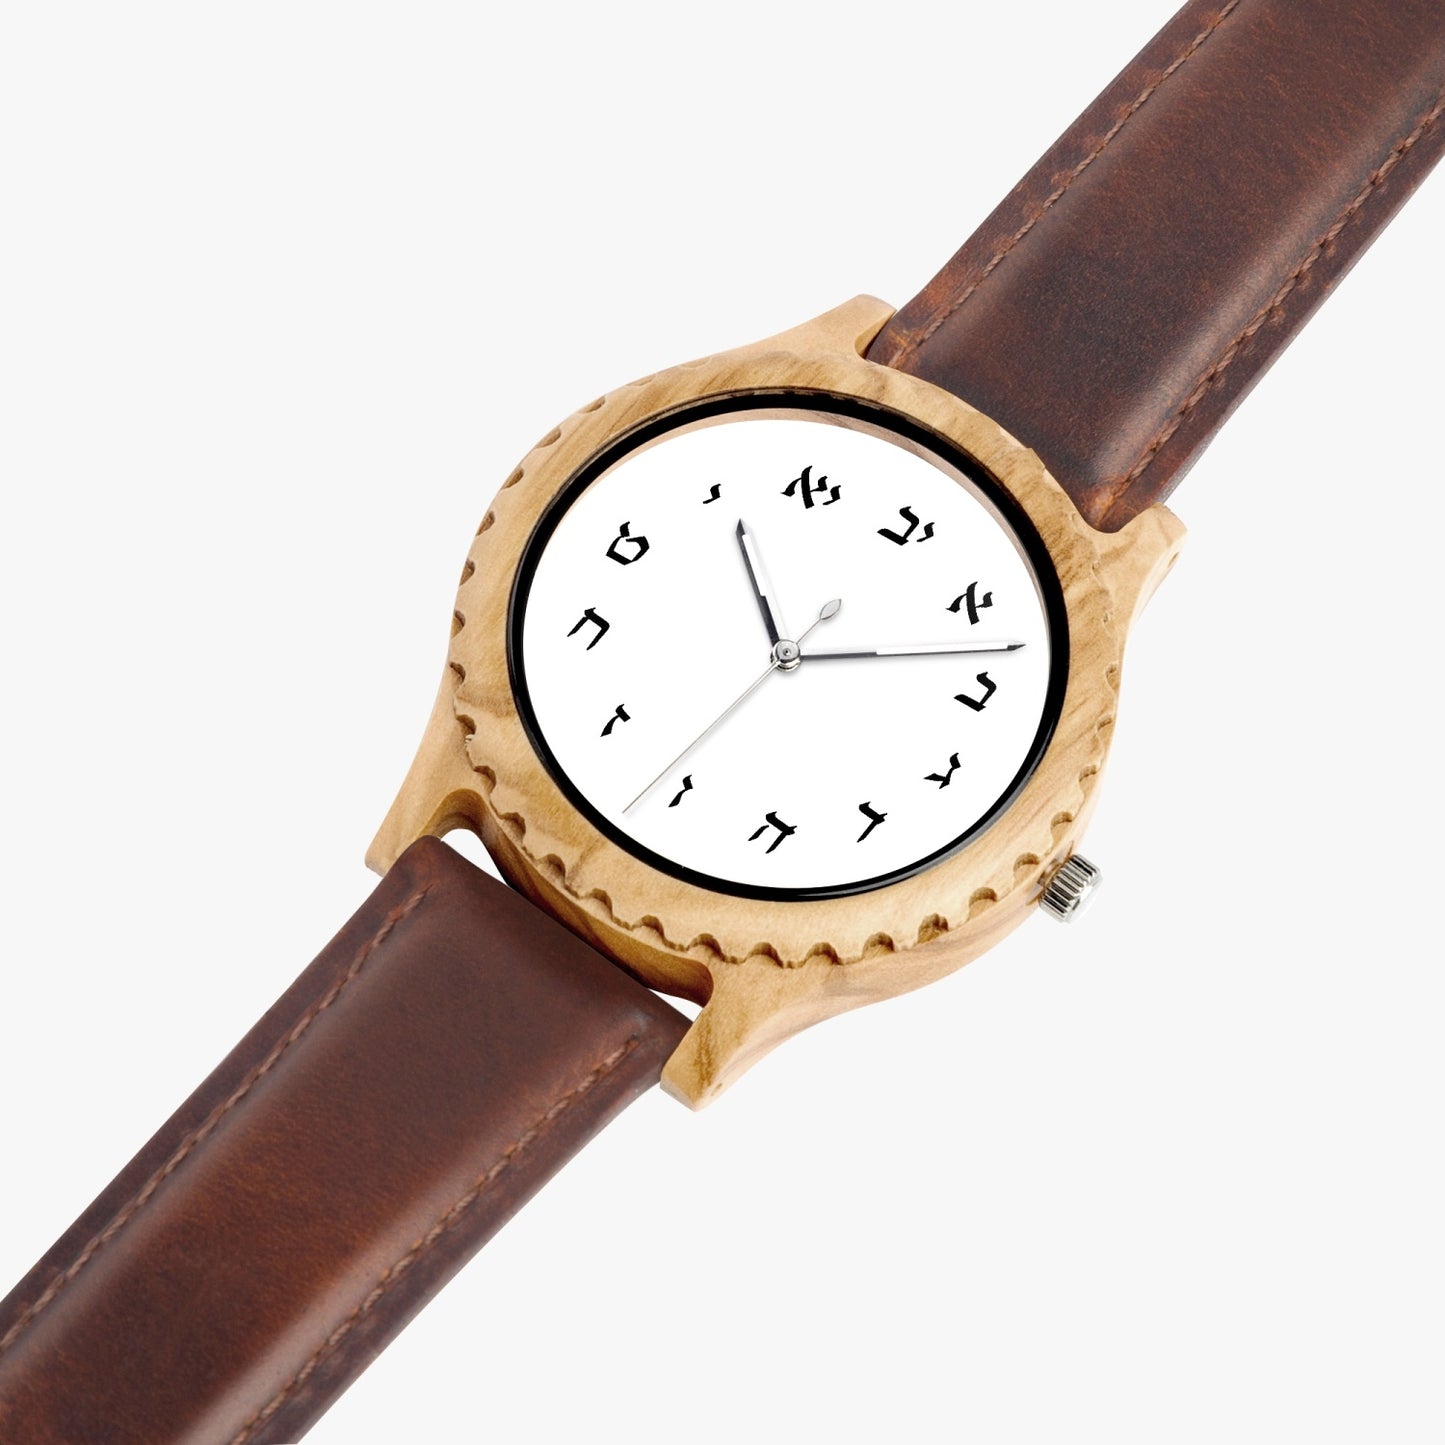 Hebrew Wooden Watch - Brown Leather Strap